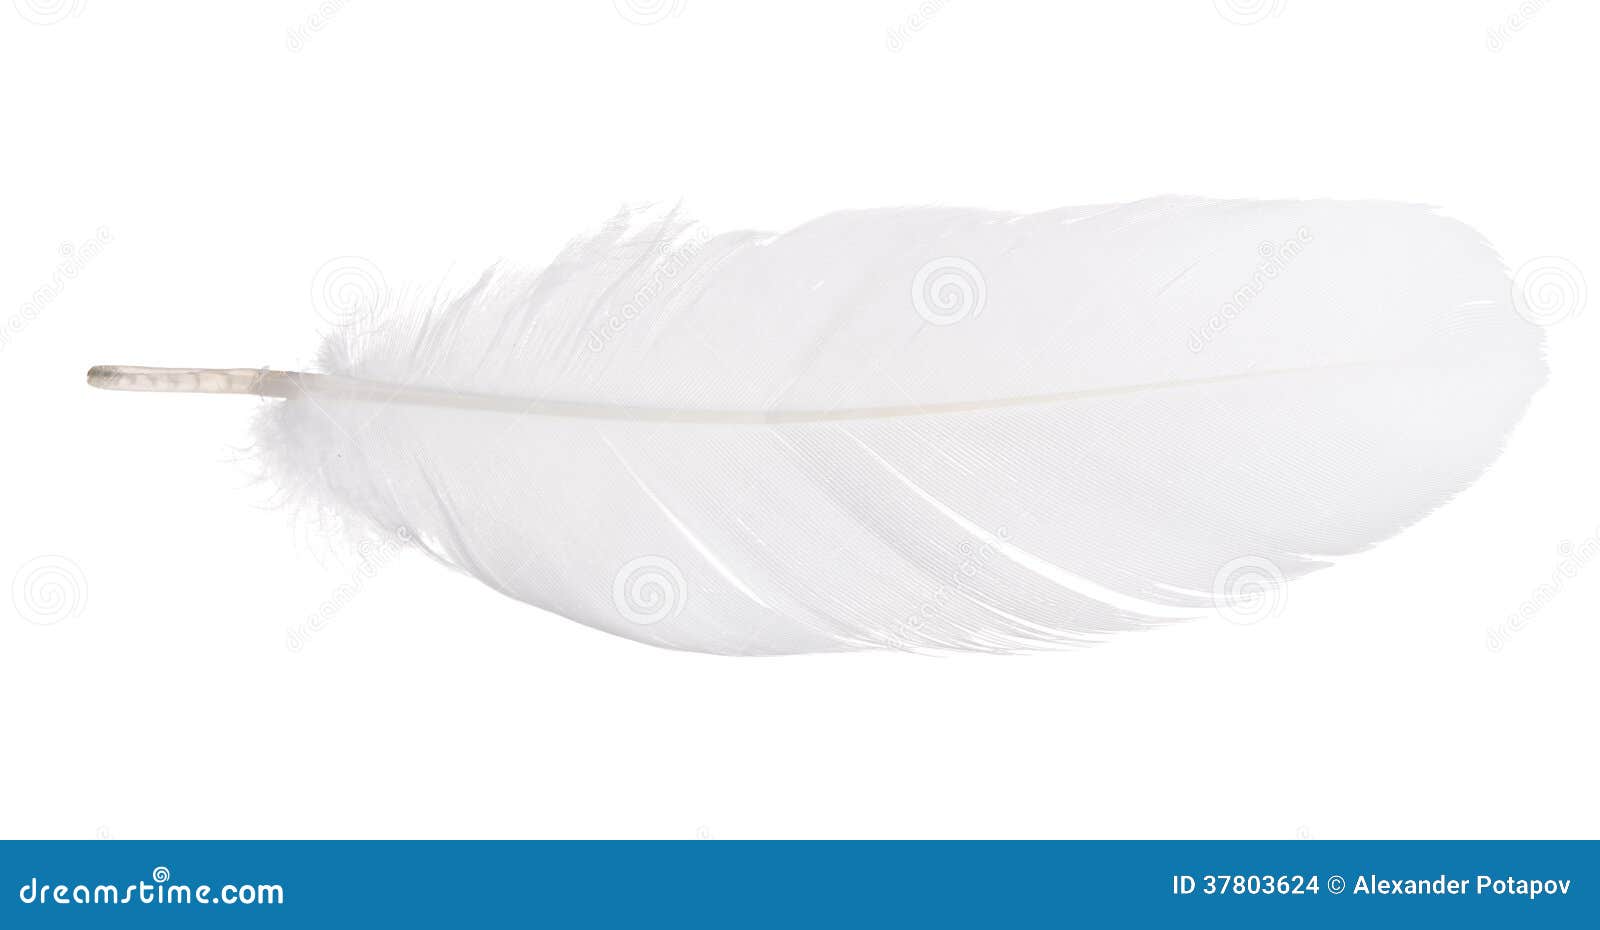 Grey Goose Feathers Isolated On White Stock Photo 2343411867